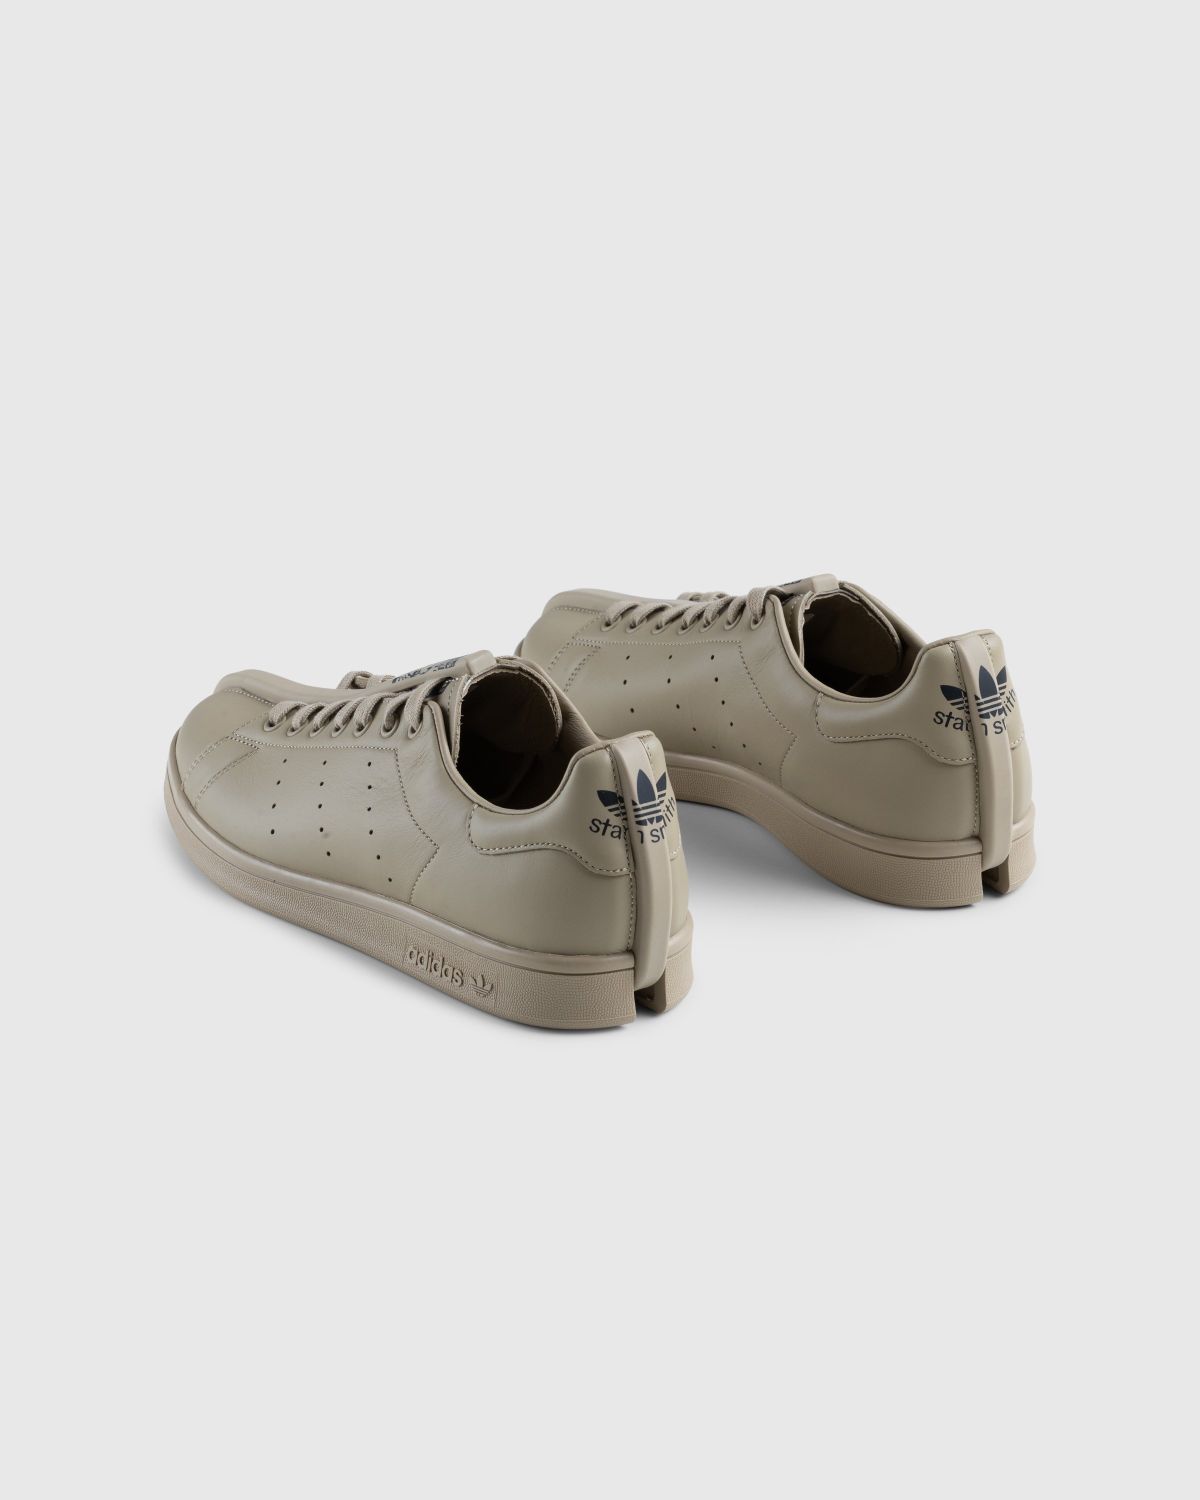 Adidas – CG Split Stan Smith Beige Tone/Core Black - Sneakers - Beige - Image 4